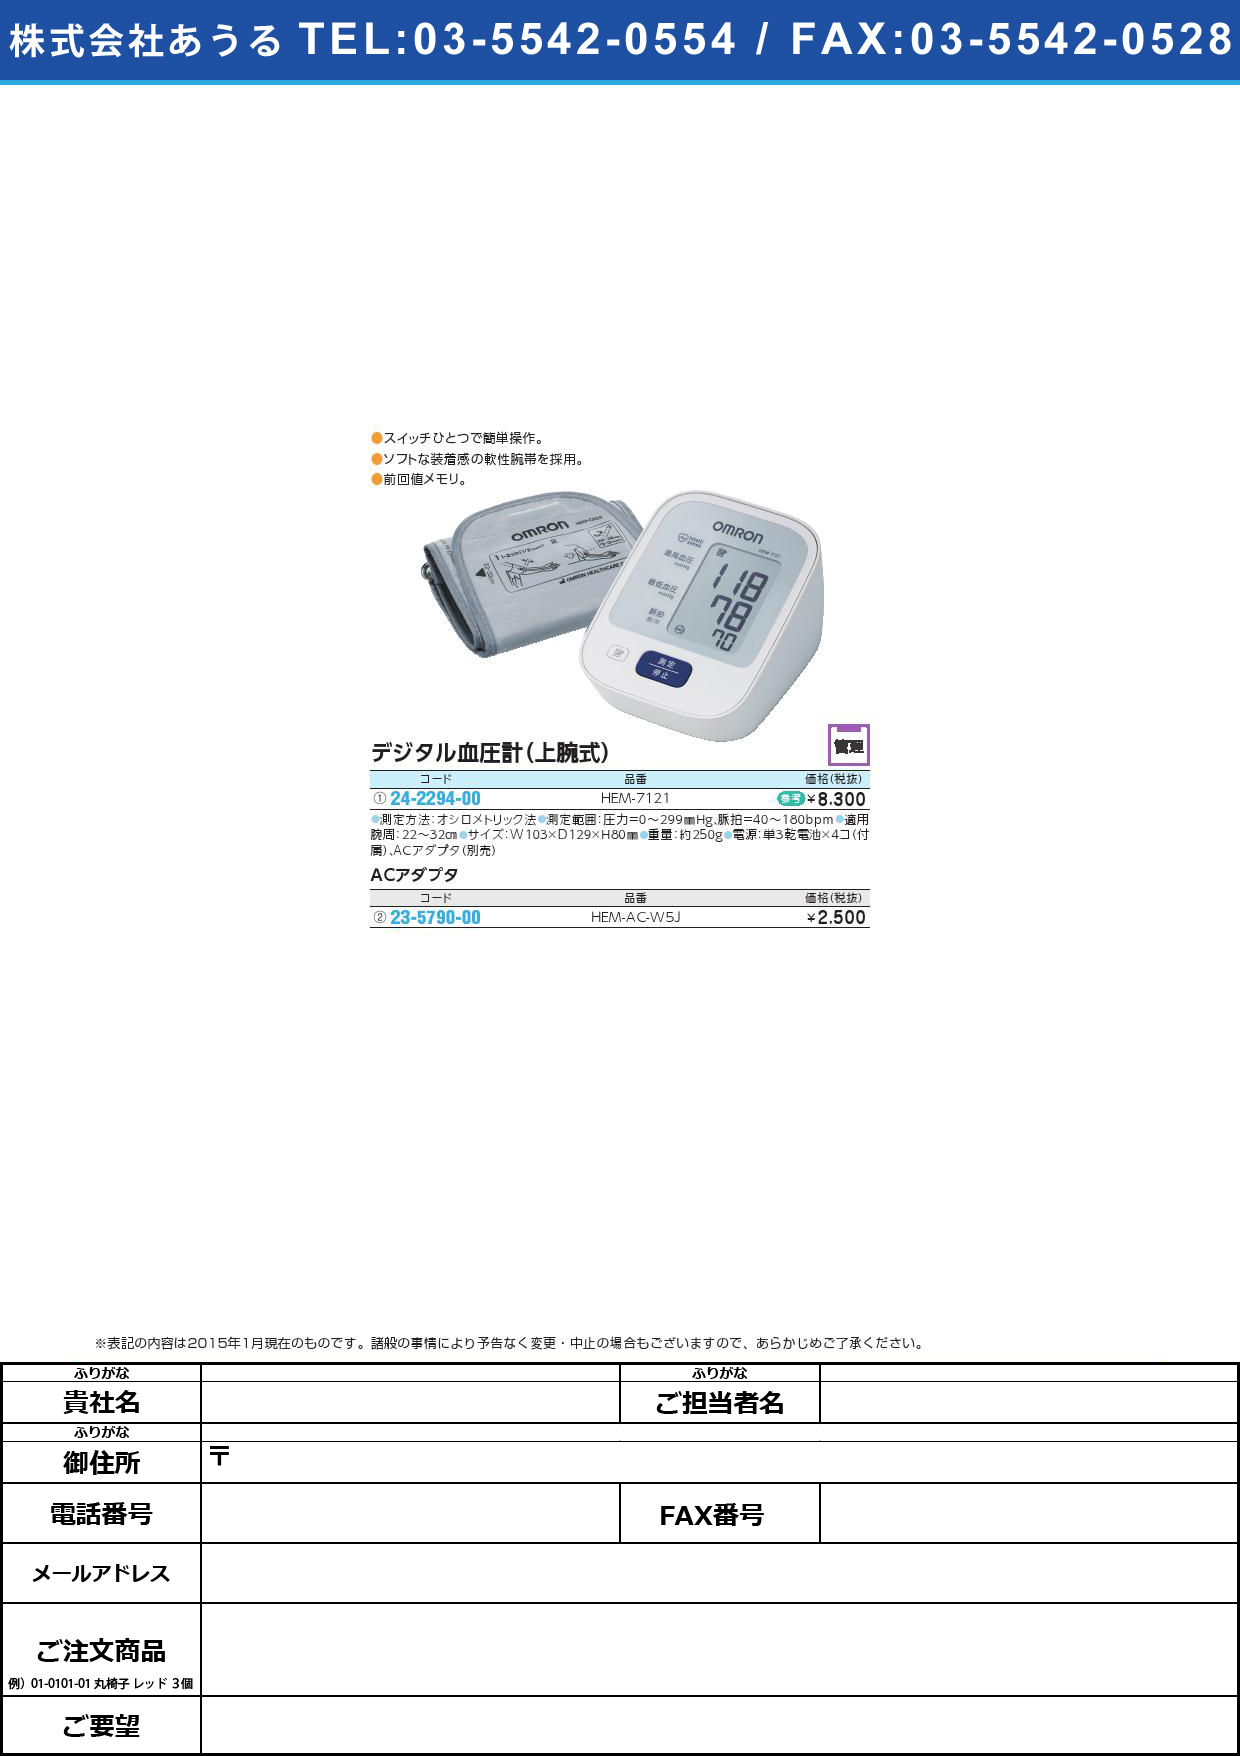 デジタル自動血圧計 ﾃﾞｼﾞﾀﾙｼﾞﾄﾞｳｹﾂｱﾂｹｲ(24-2294-00)HEM-7121